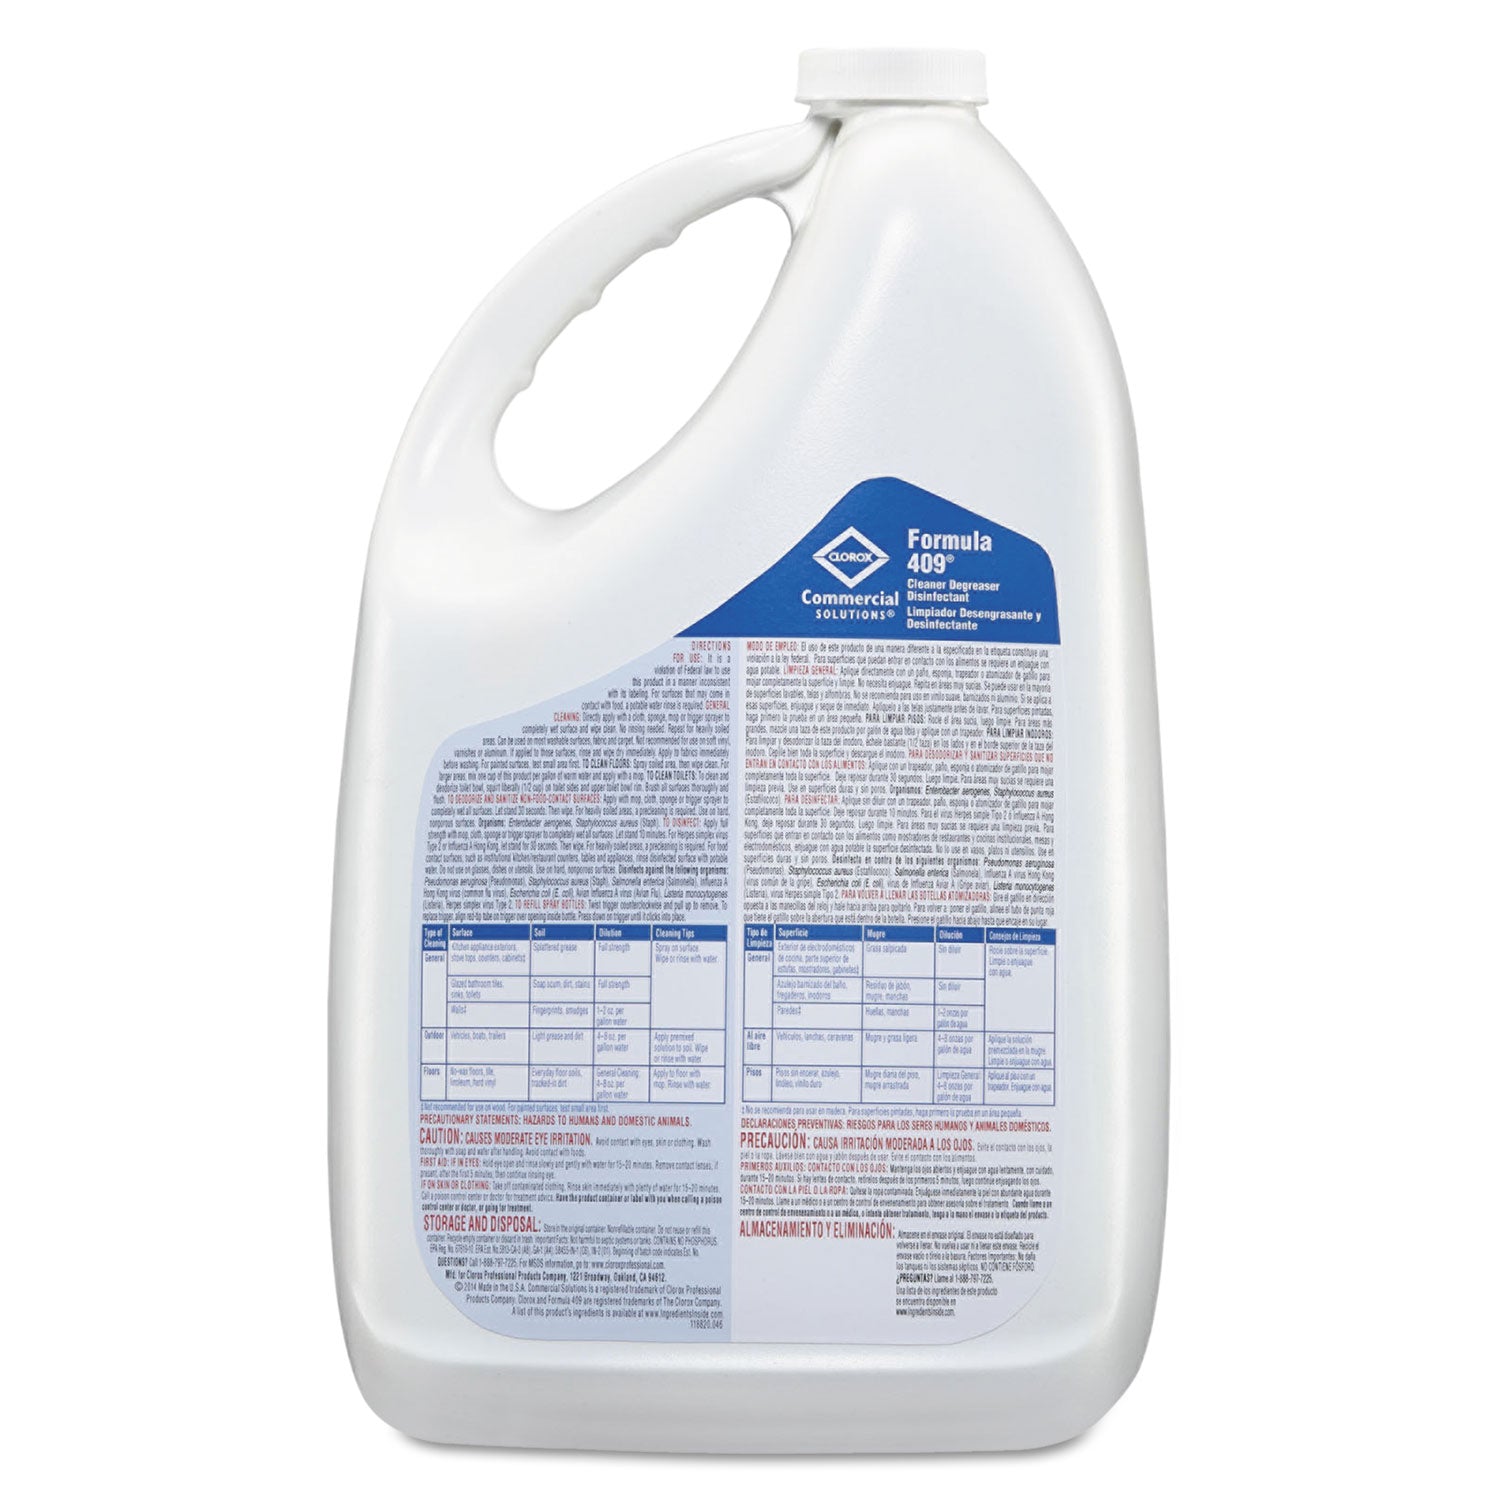 Cleaner Degreaser Disinfectant, 128 oz Refill - 